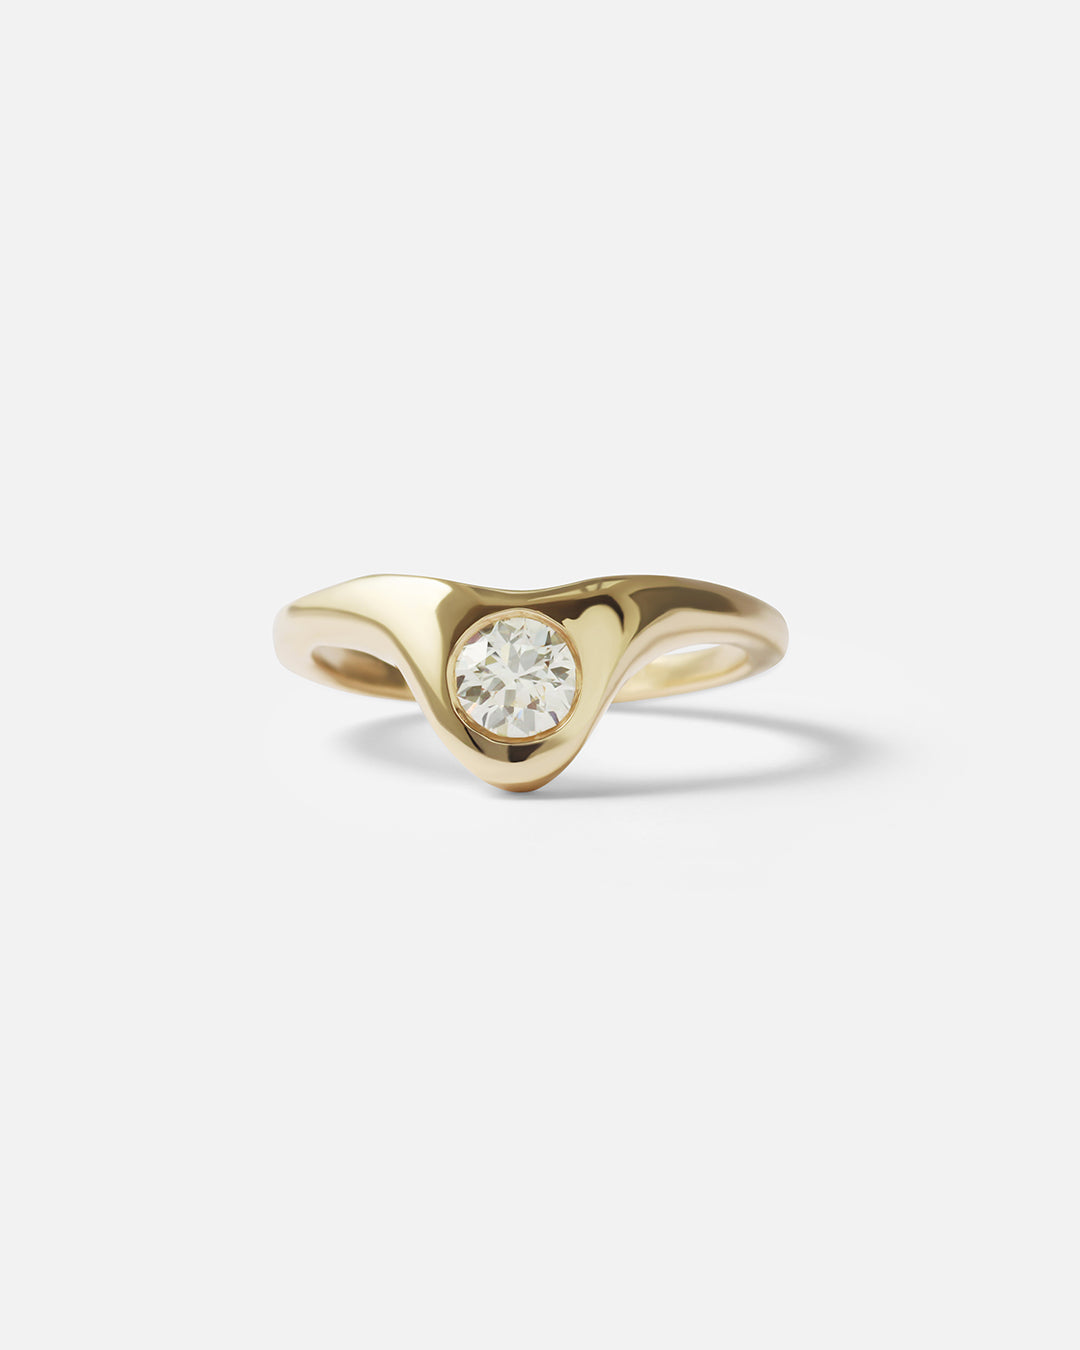 Bezel Set / Diamond Ring By Nishi